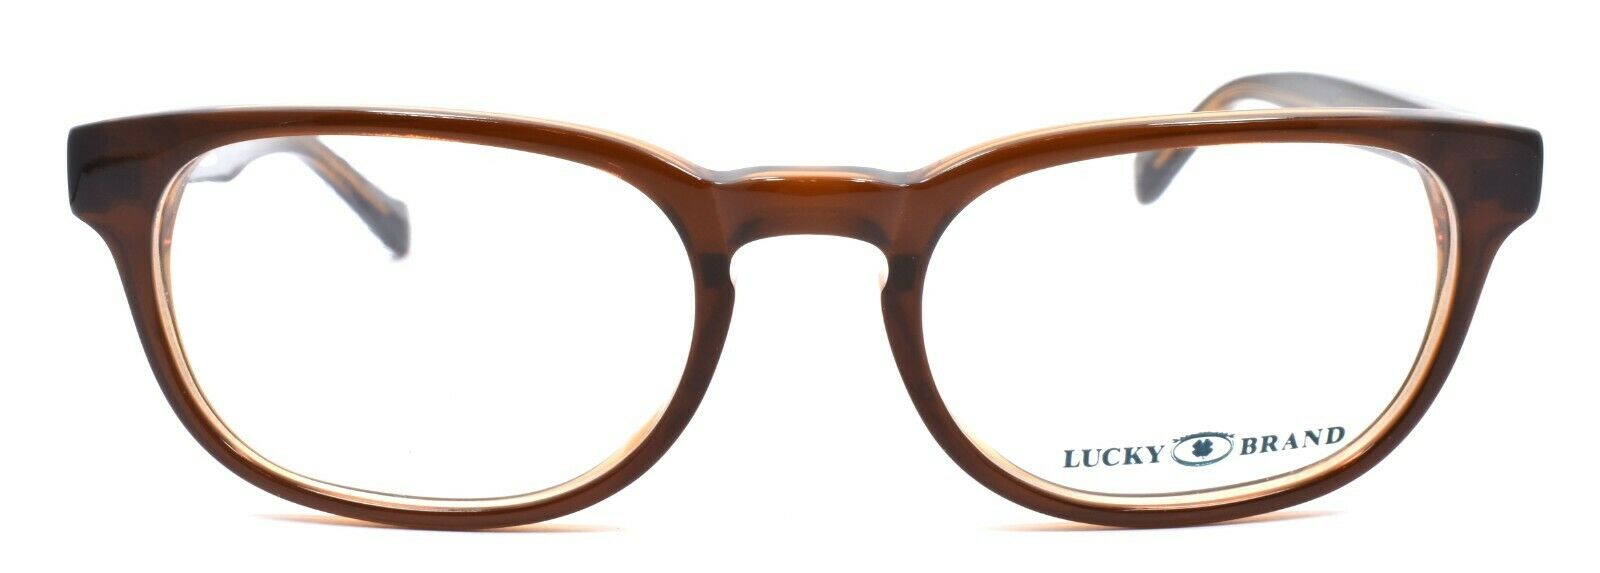 2-LUCKY BRAND Ingenious Kids Unisex Eyeglasses Frames 45-16-130 Brown + CASE-751286250947-IKSpecs